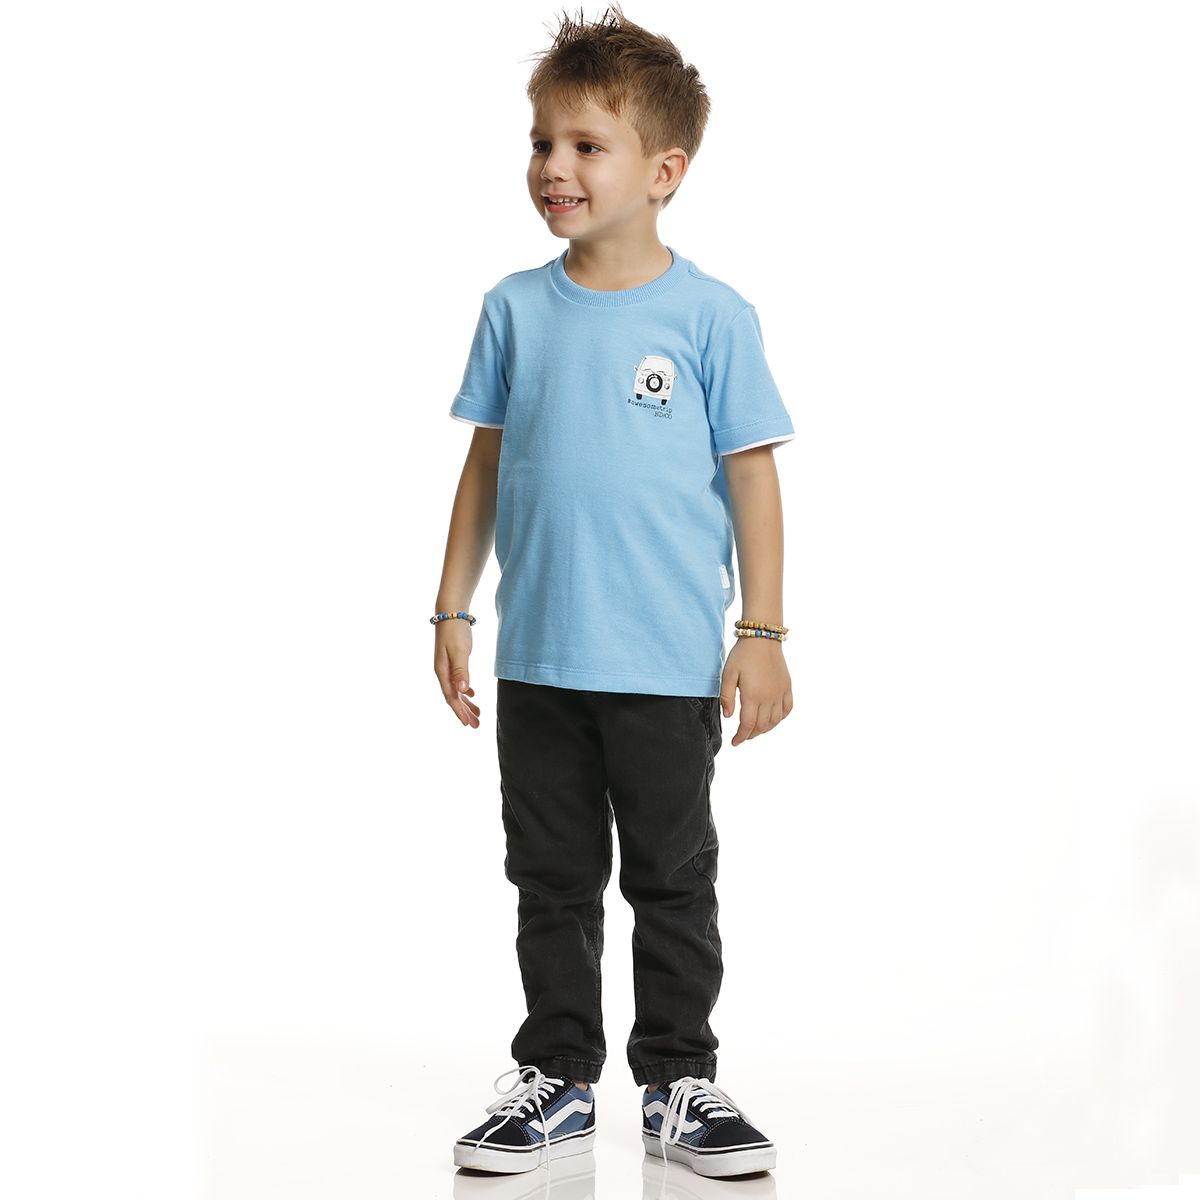 Camiseta Banana Danger Masculina Infantil Azul Praiano